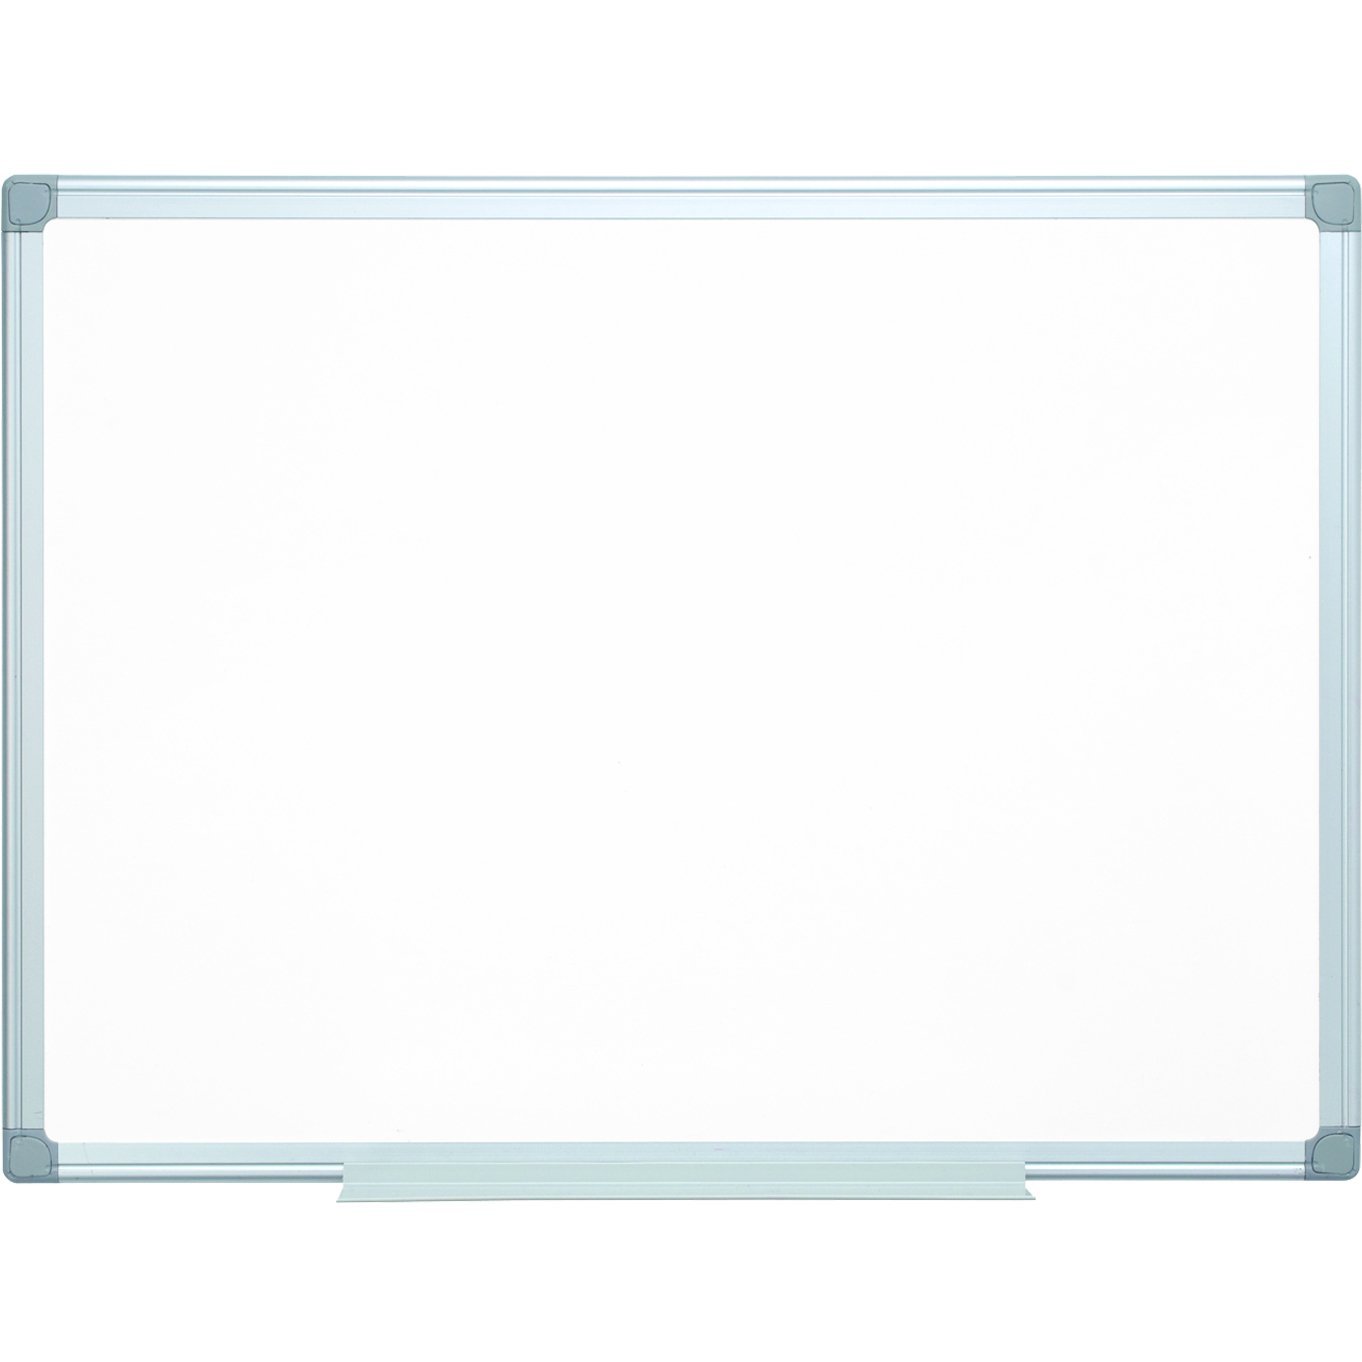 Q-connect emaljeret whiteboardtavle 1000 mm x 1500 mm, Stål/Aluminium